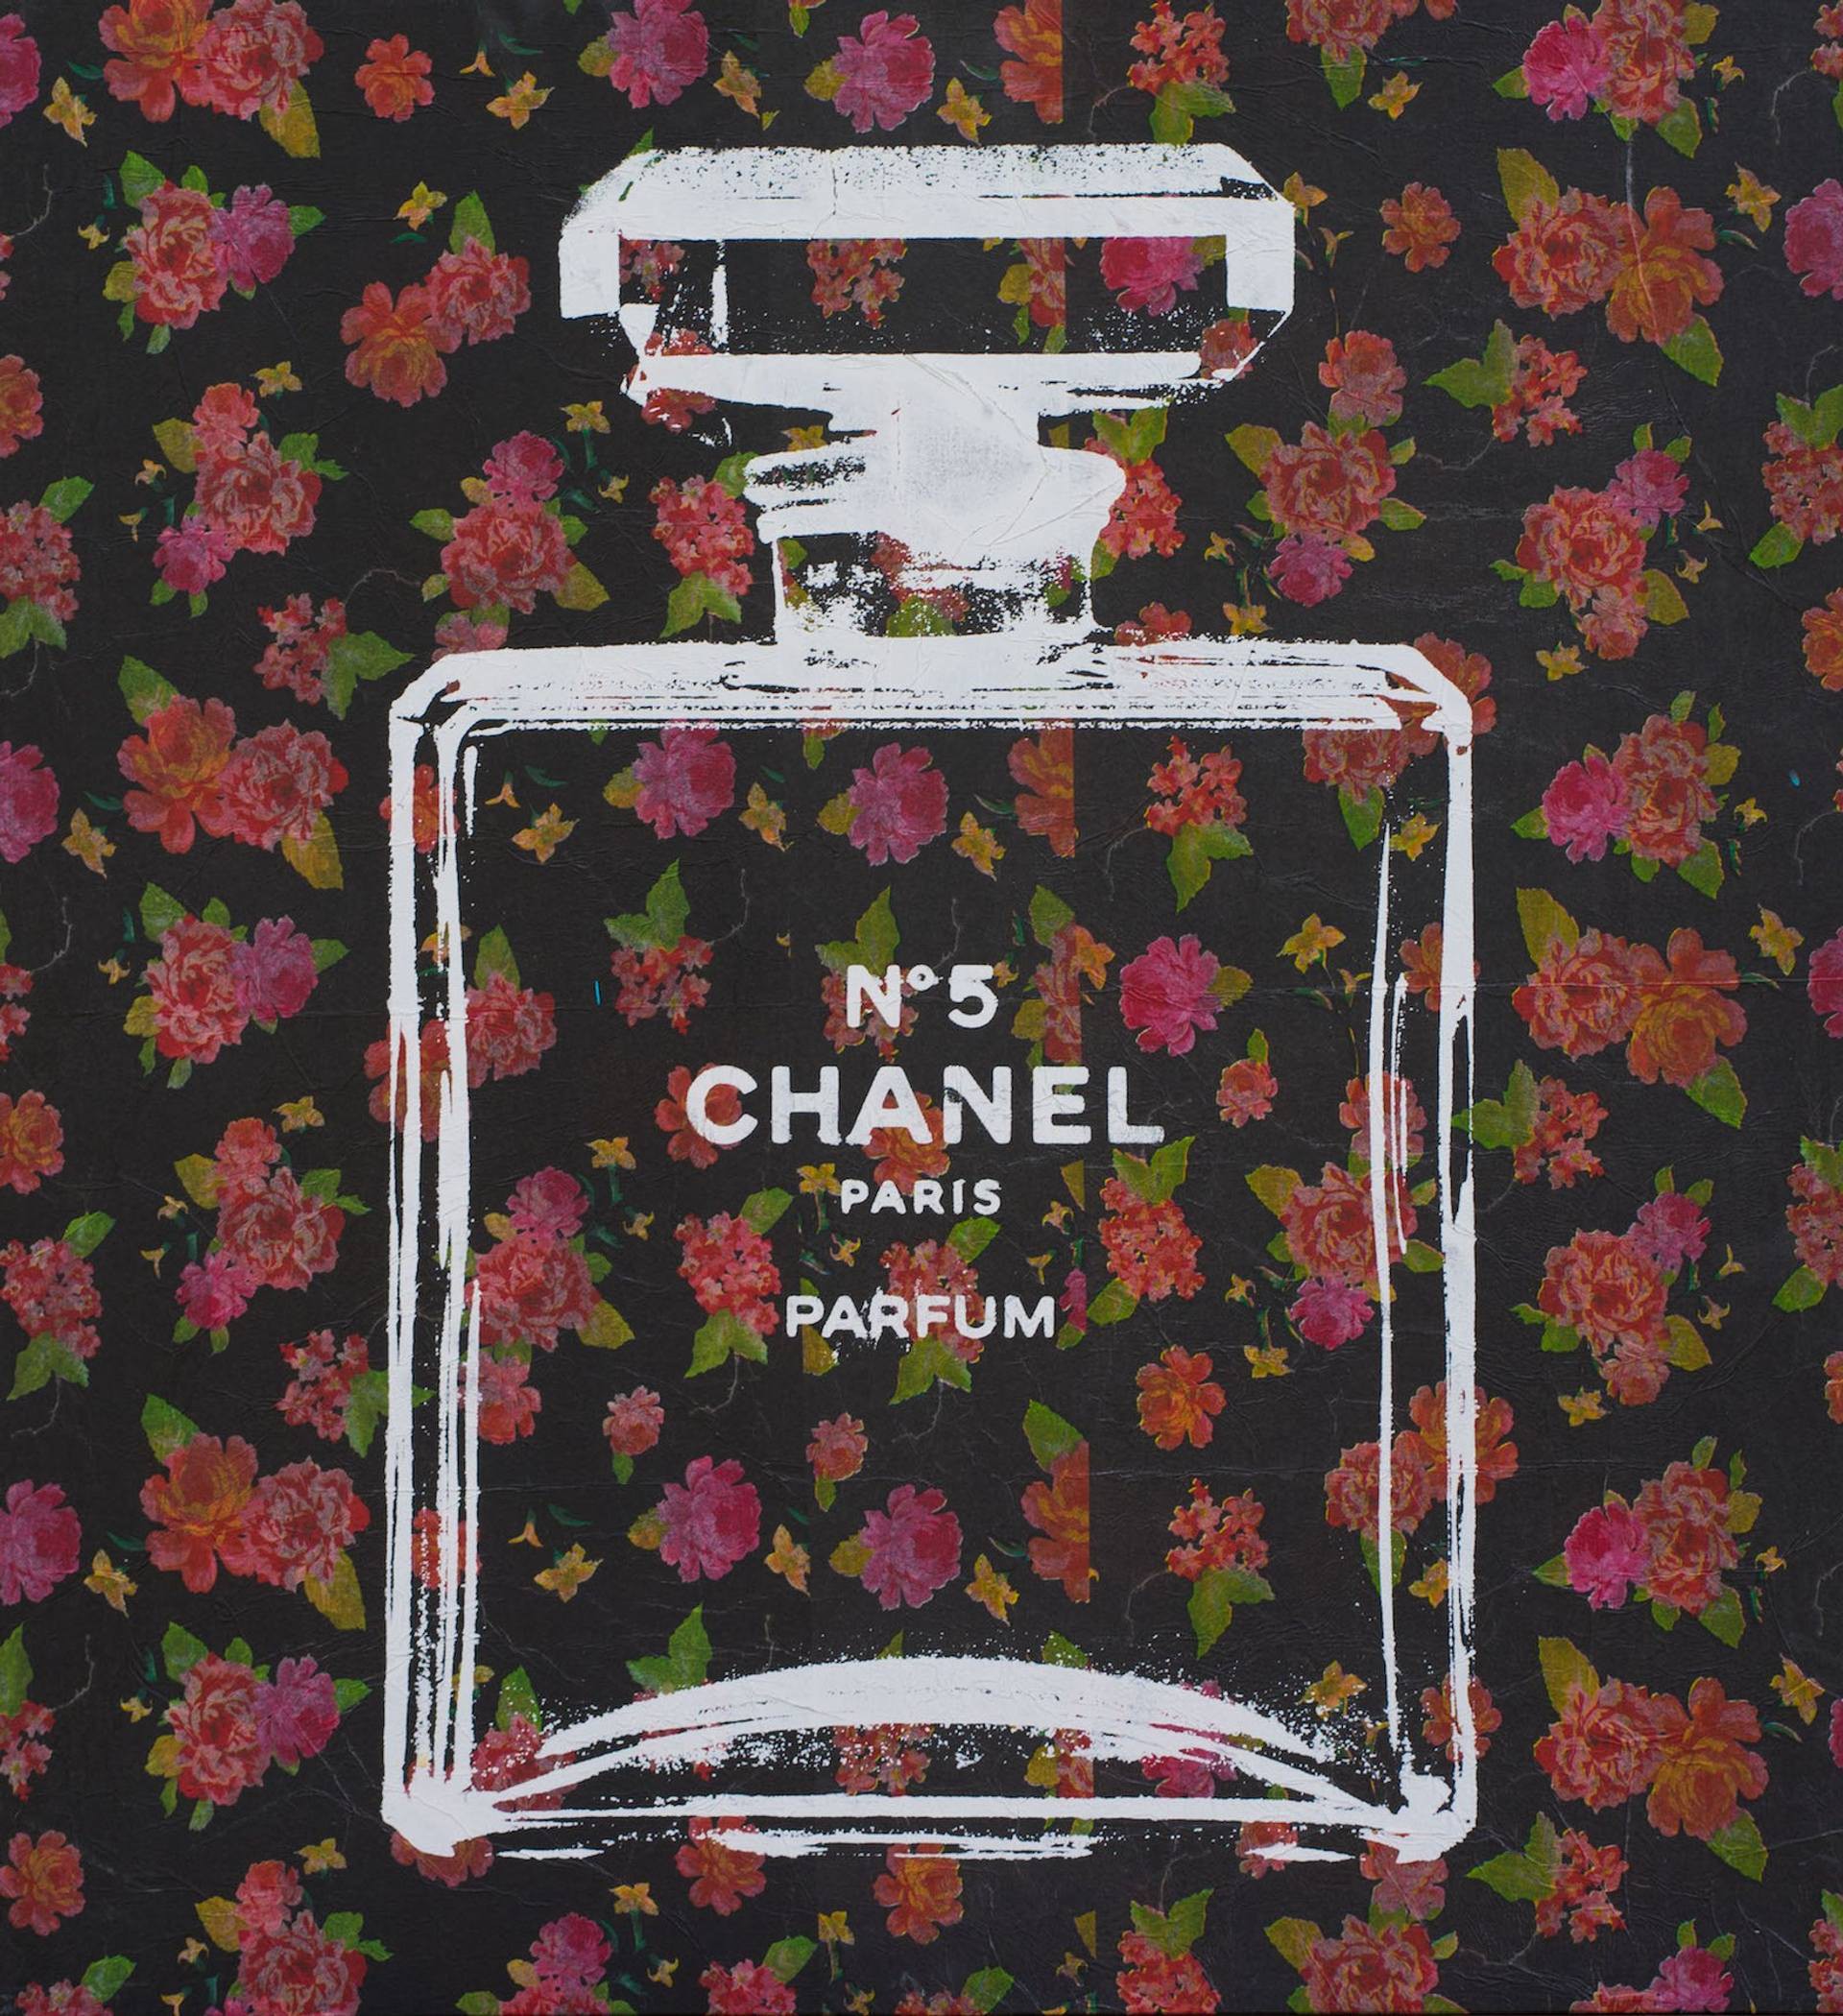 Chanel No.5 by Dane Shue, 2021 | Painting | Artsper